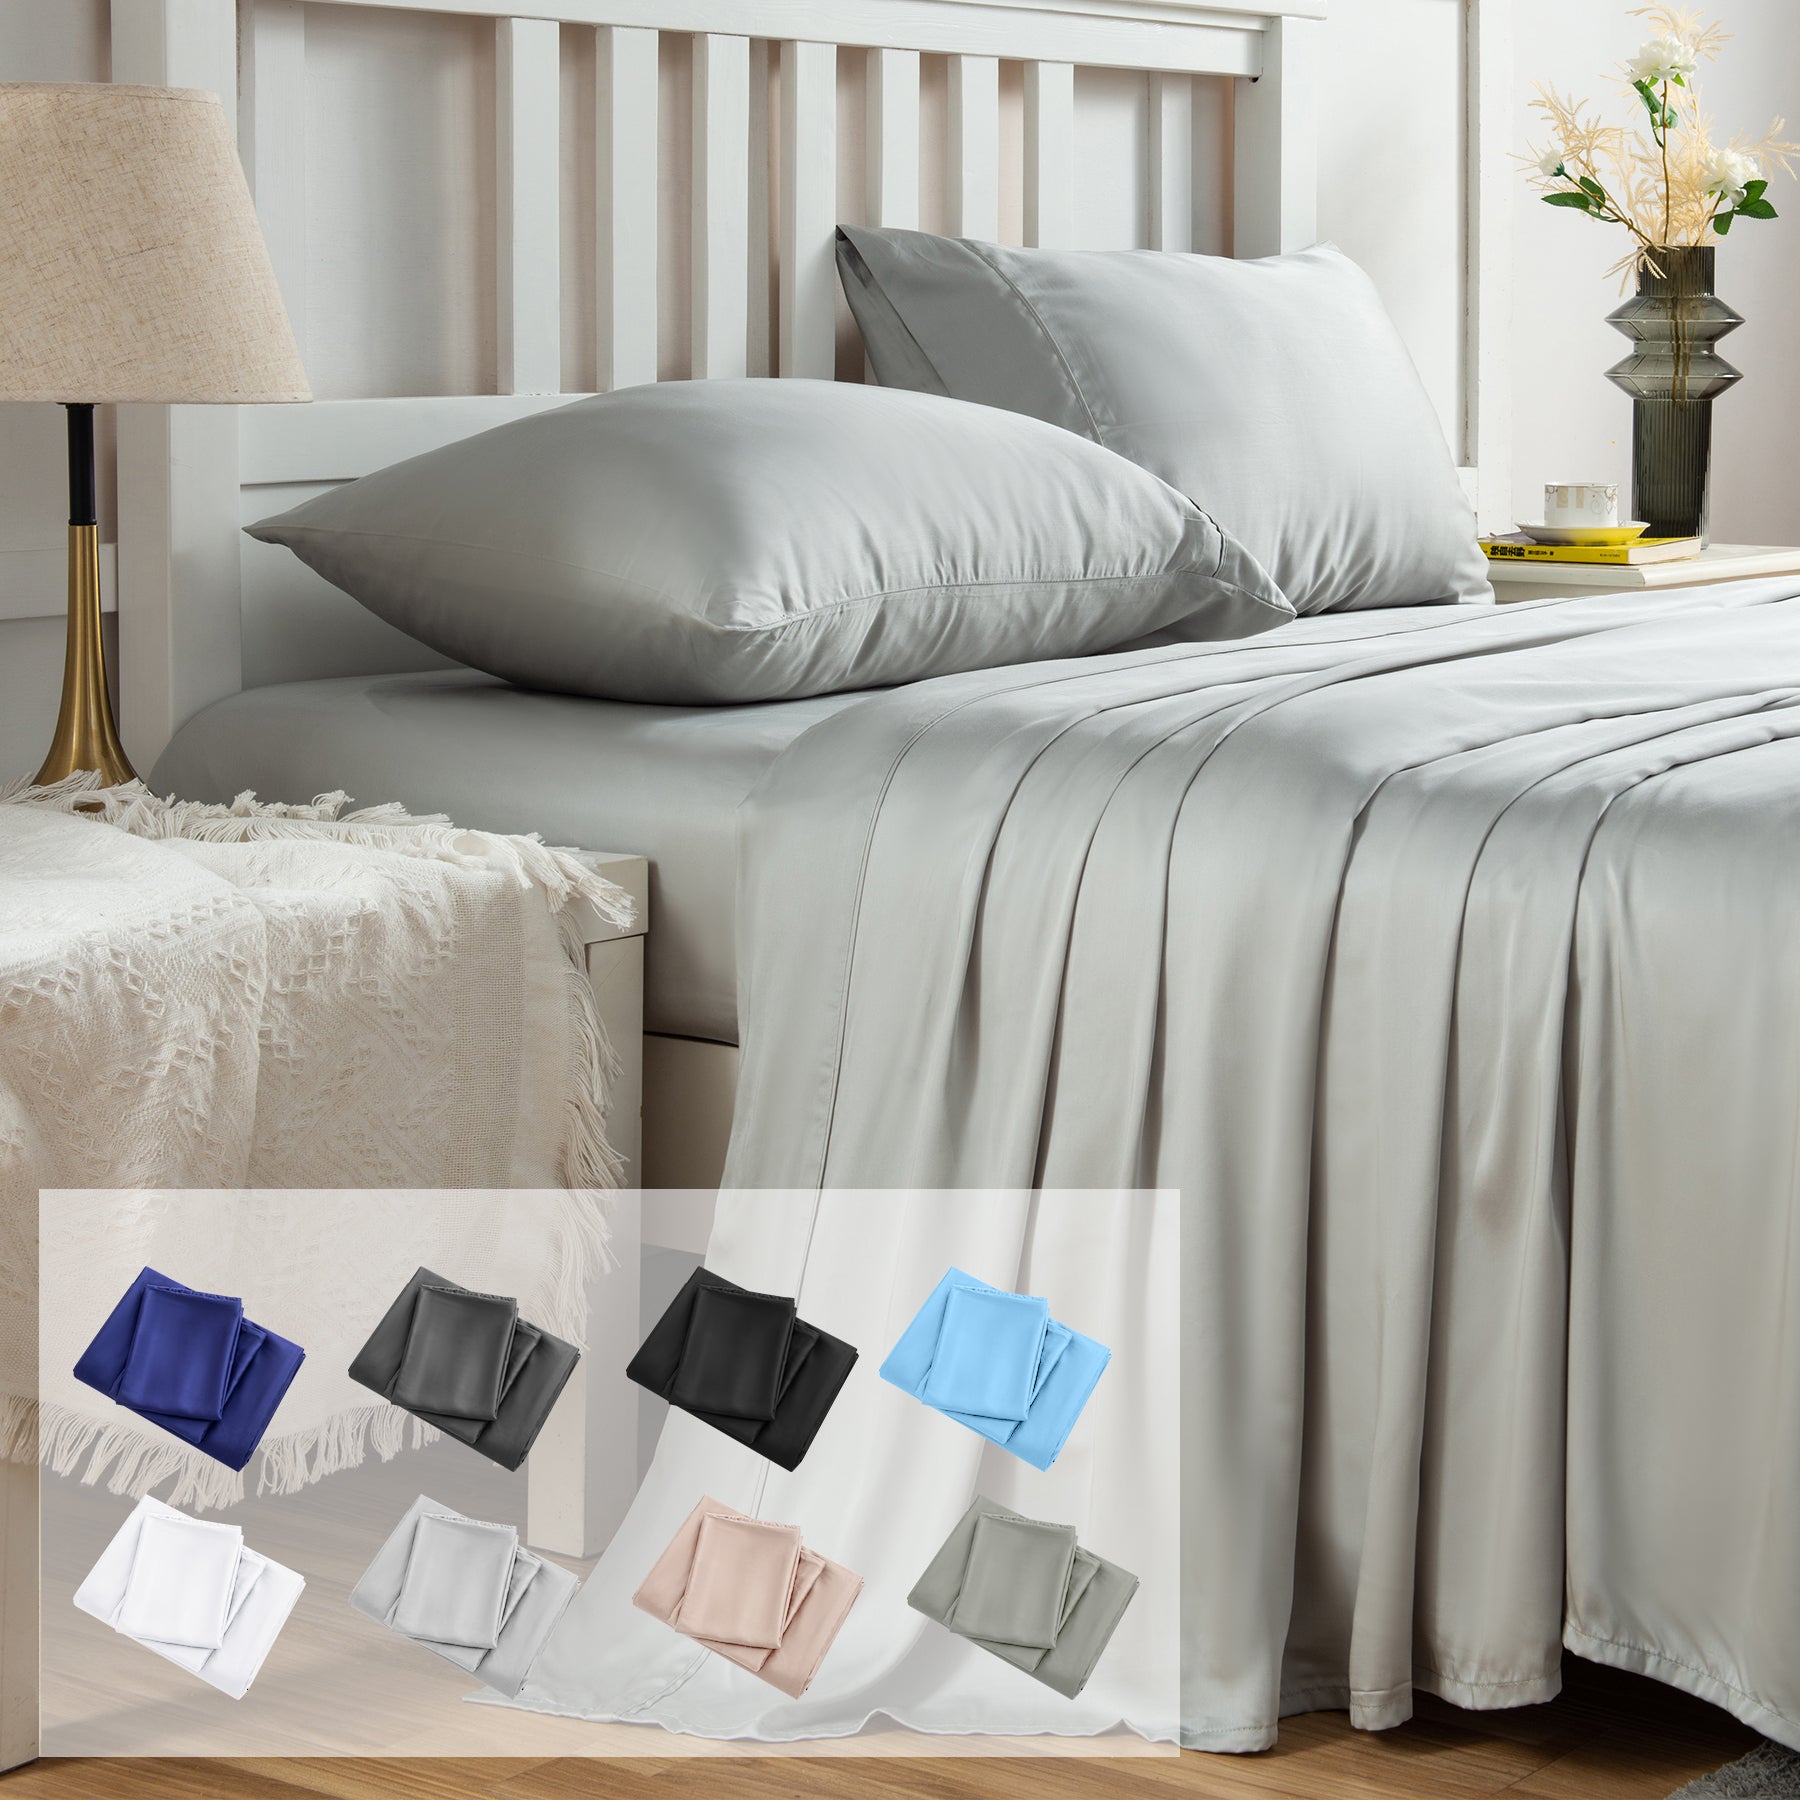 LINENOVA 100% Natural Premium Bamboo Sheet Sets Pillowcases Flat Fitted Sheet Pillowcases All Size